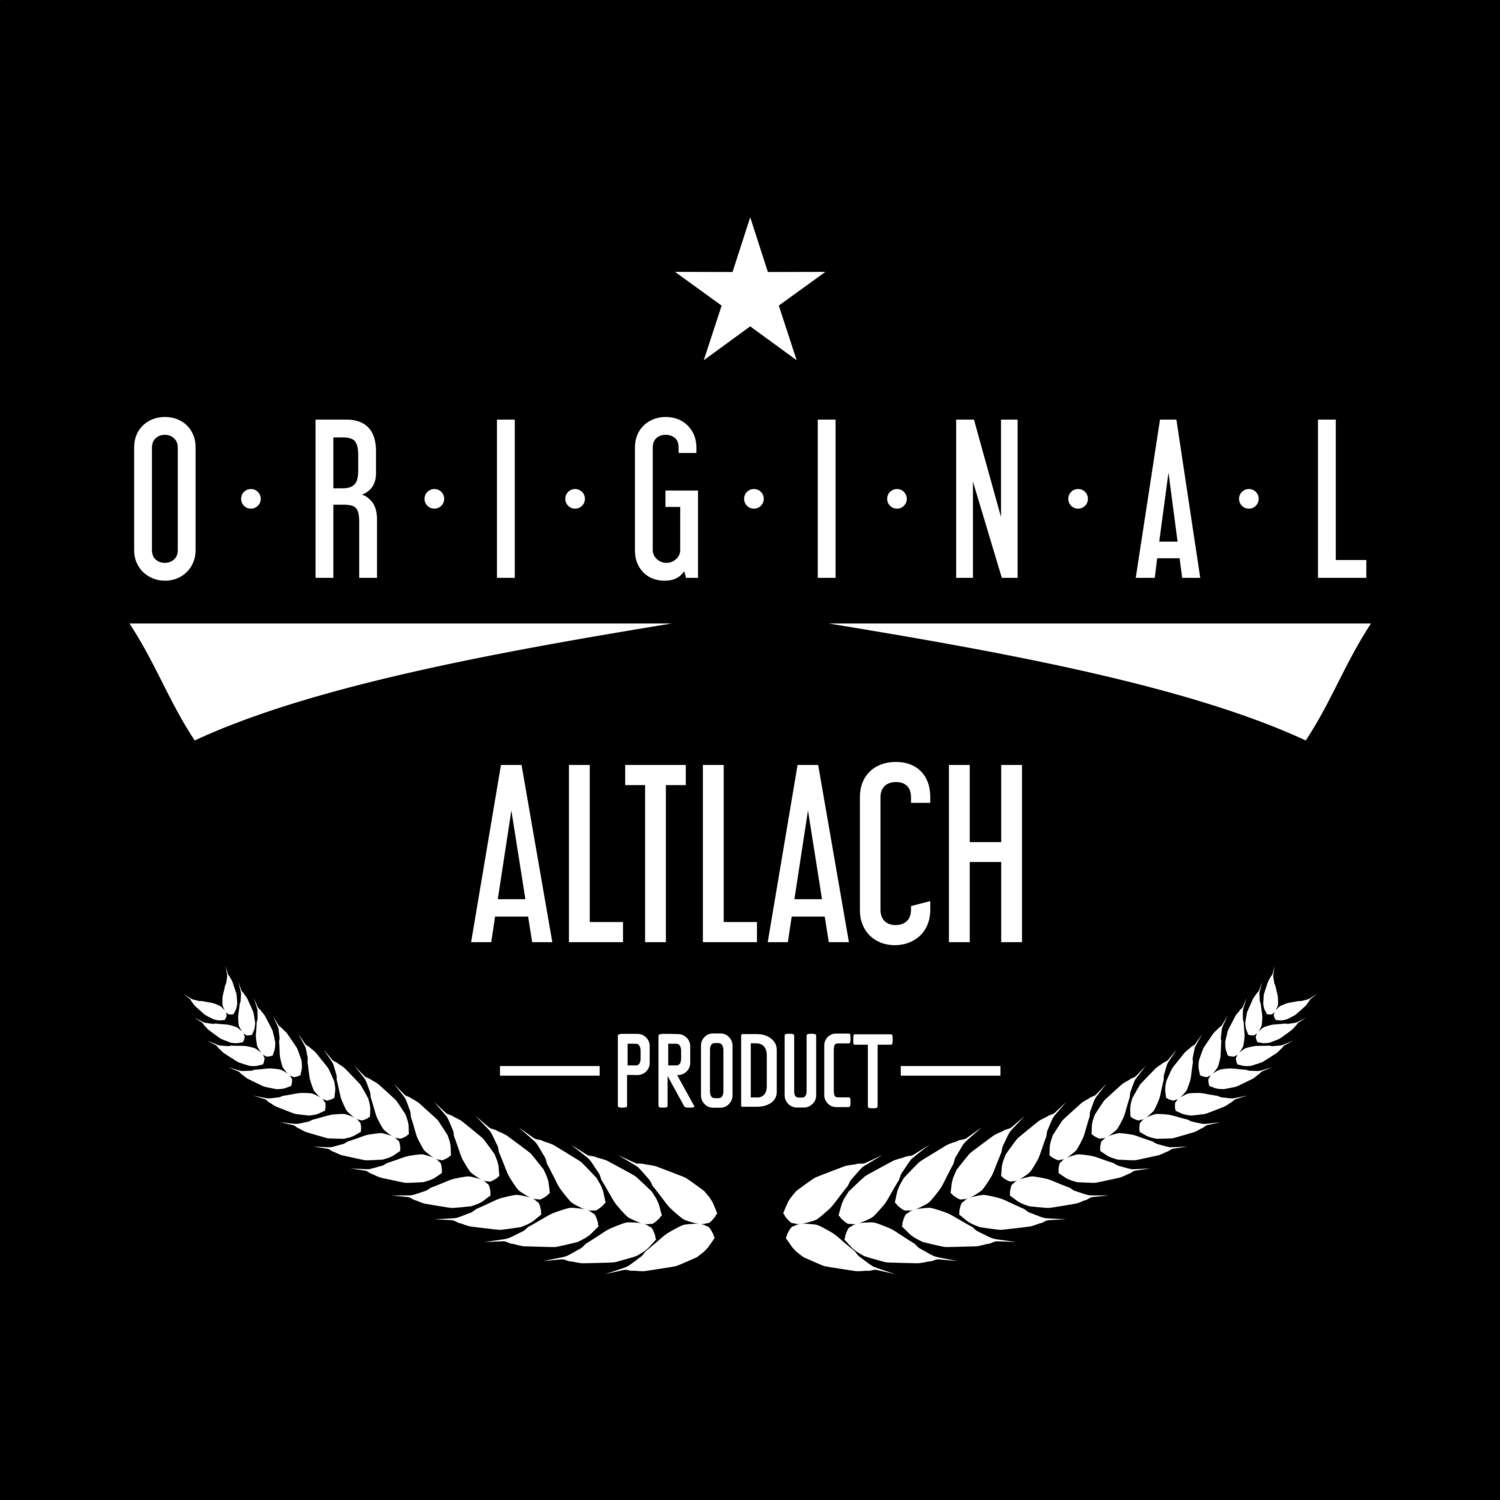 Altlach T-Shirt »Original Product«